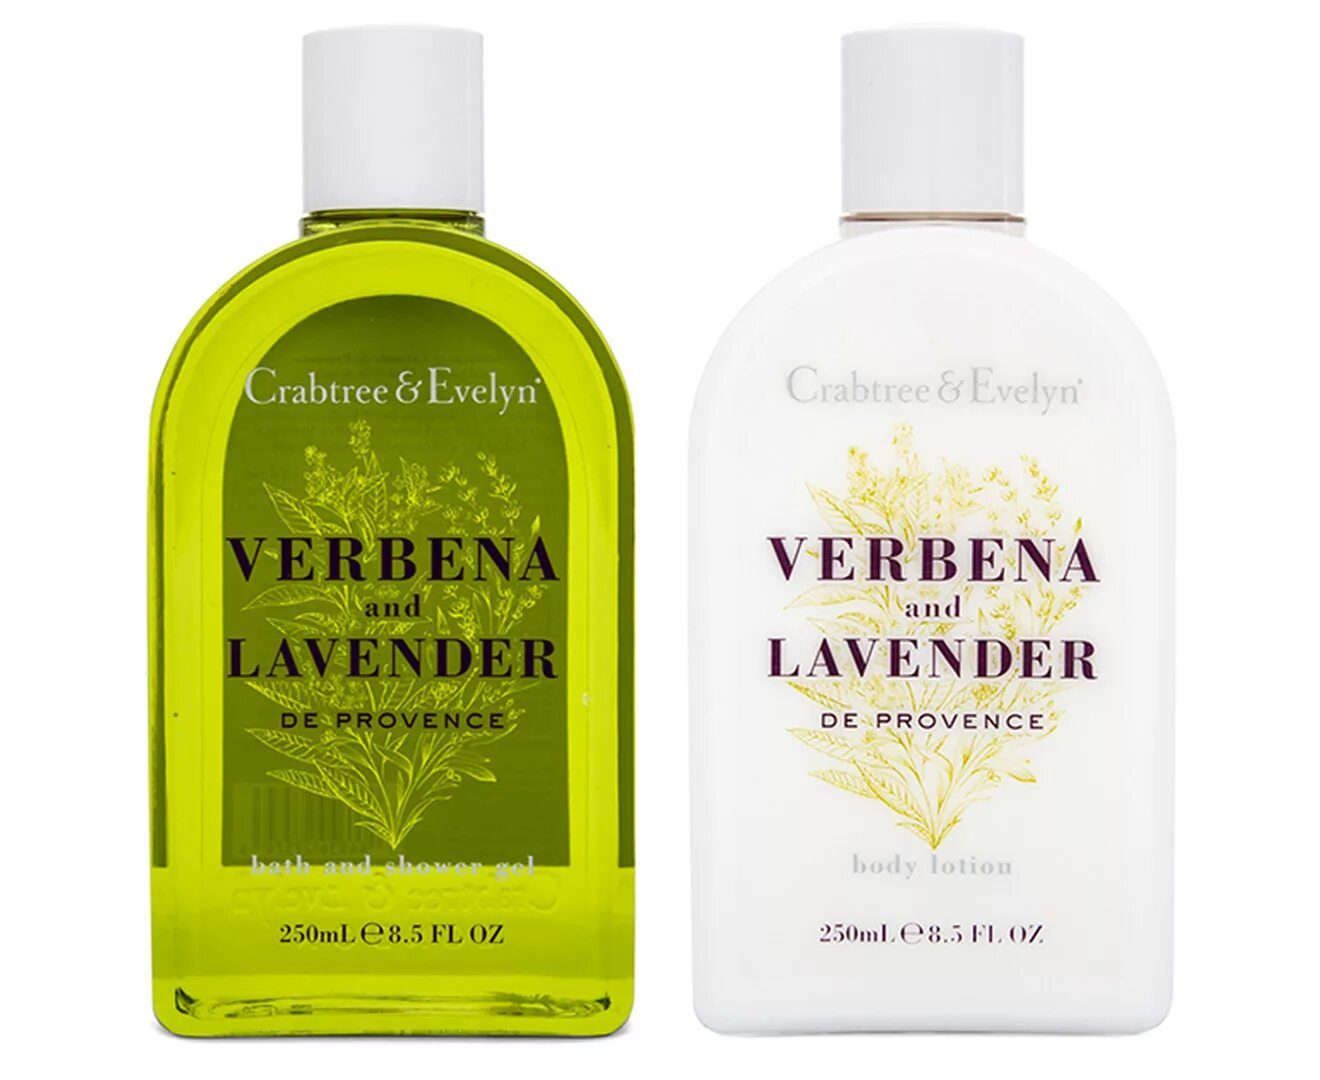 Crabtree Evelyn Verbena Lavender. Crabtree & Evelyn Verbena and Lavender body Lotion (250ml). Verbena Lavender шампунь. Verbena and Lavender de Provence.